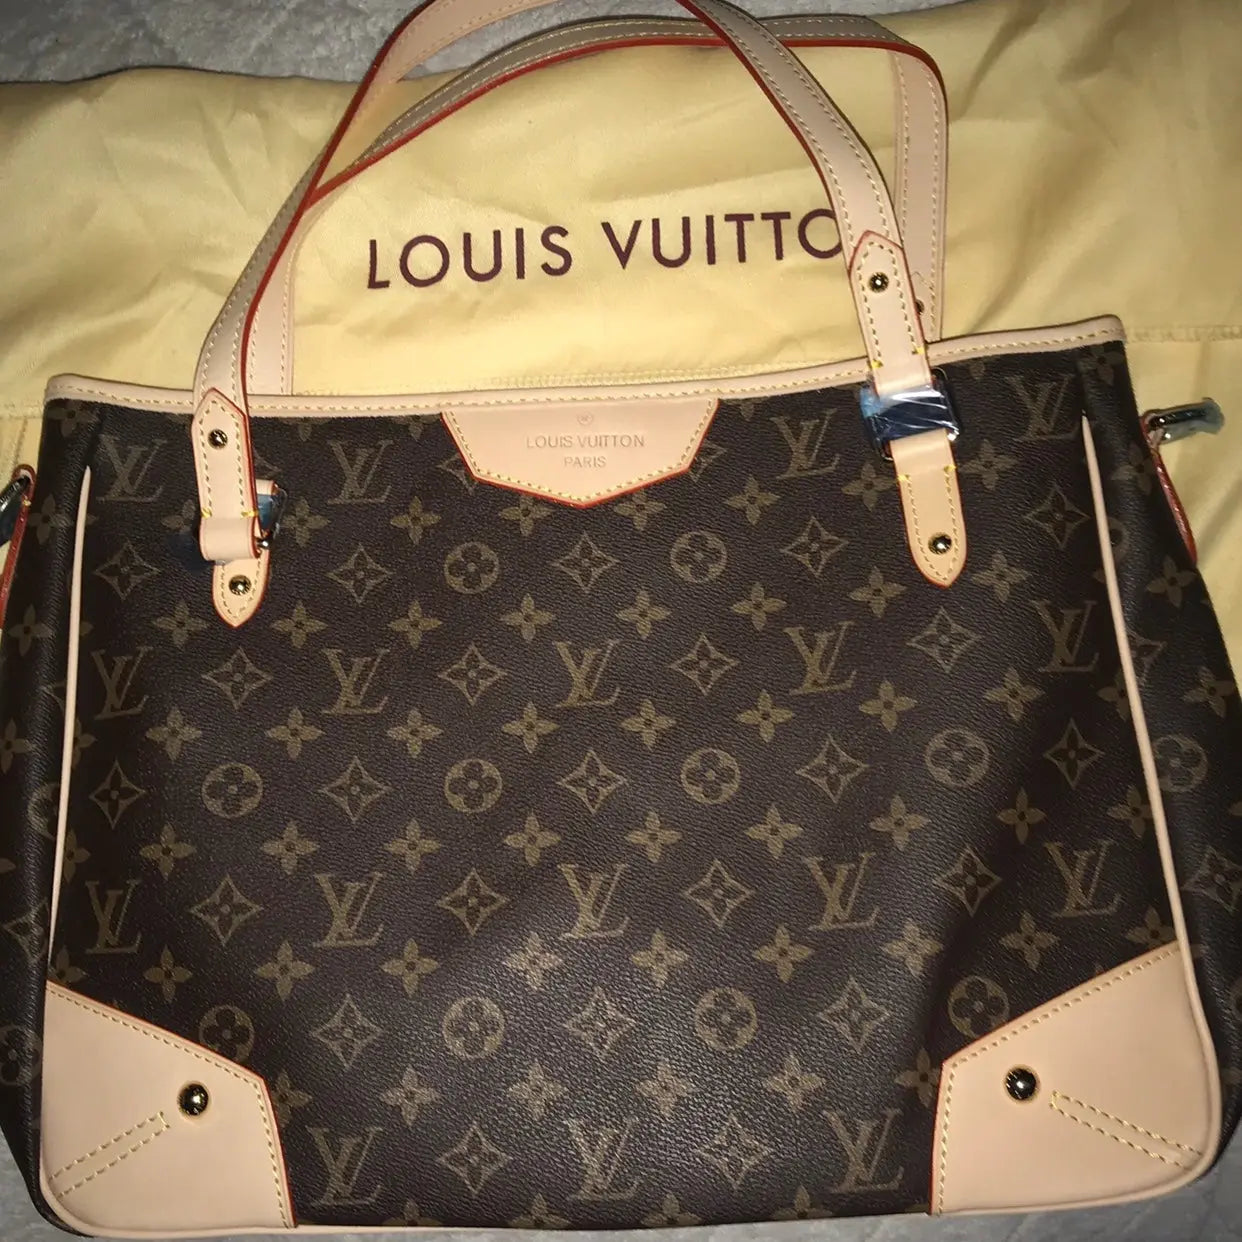 Buy Cheap Louis Vuitton Handbag 1:1 AAA+ Original Quality